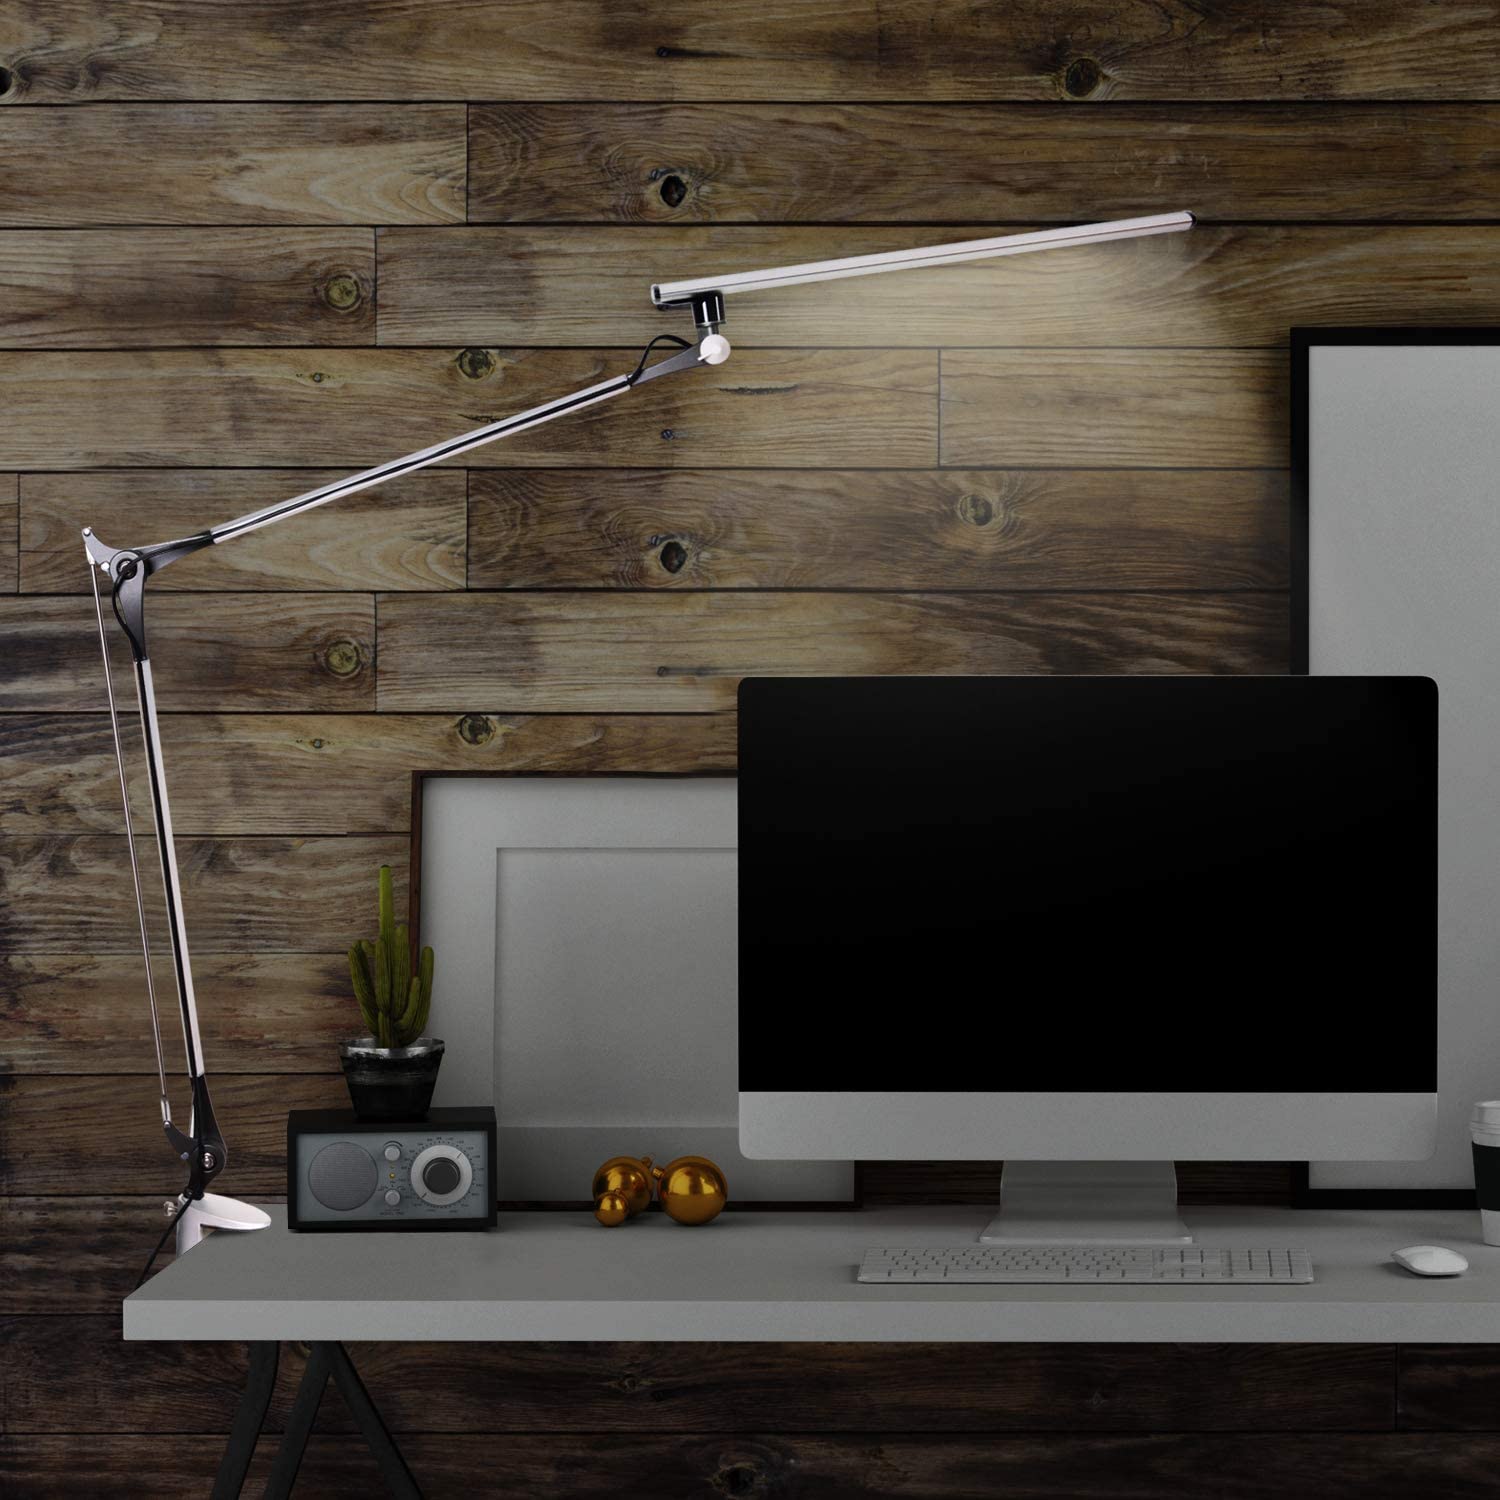 Tips For Finding The Best Desk Lamp For Artist Brand Review